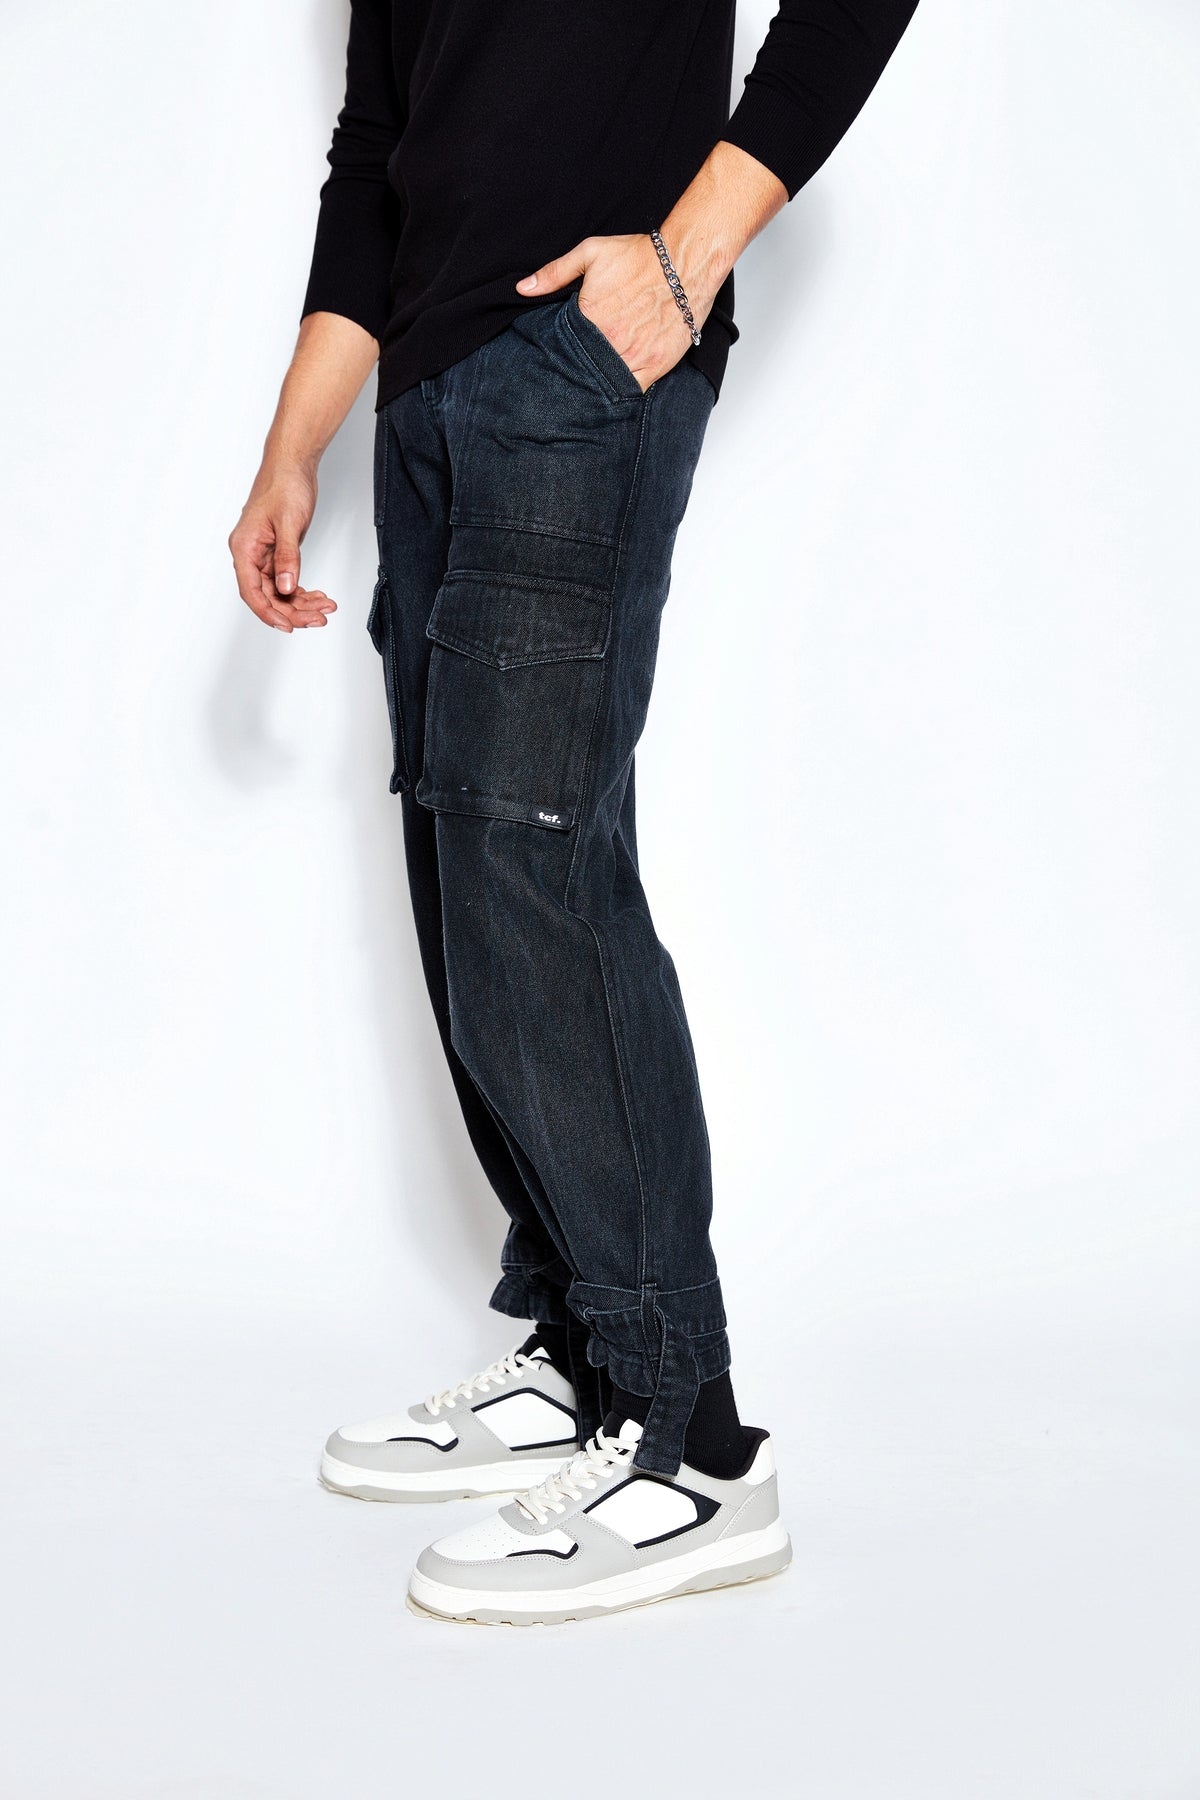 Buy SKENJEL Men's Casual Cotton Loose Denim Cargo Pants (36, Grey) at  Amazon.in